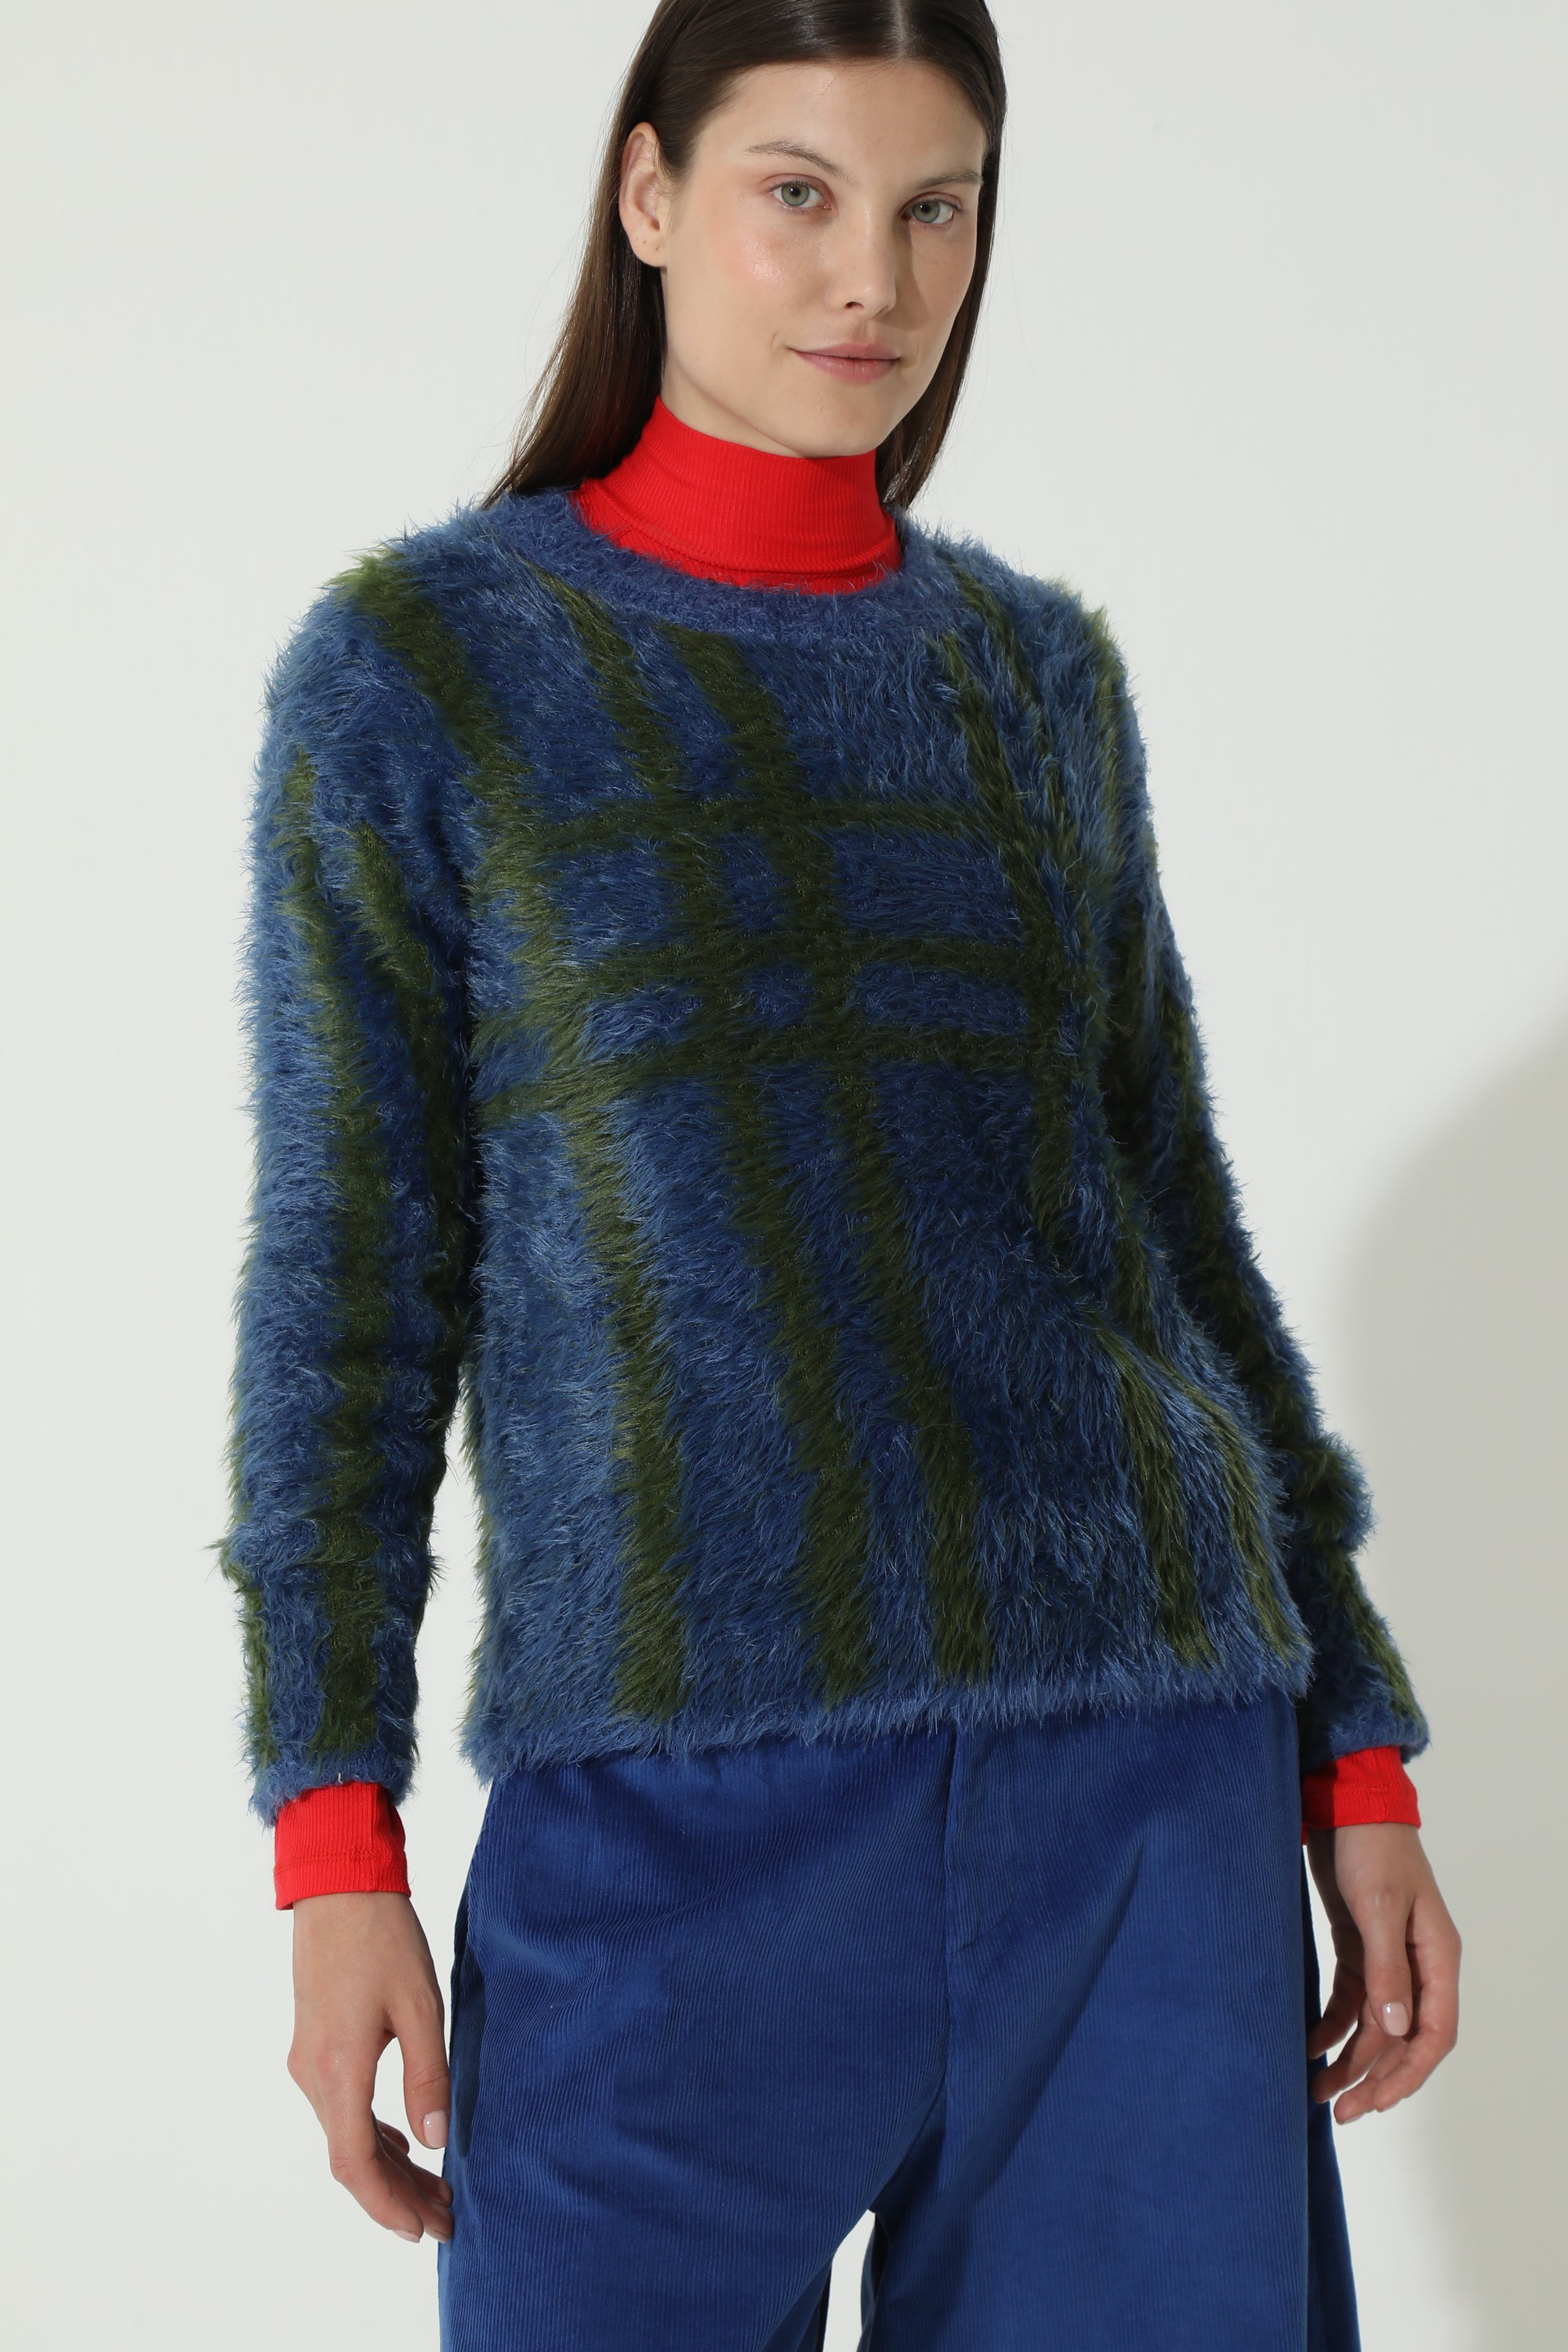 Sweater Escocés Azul Verde